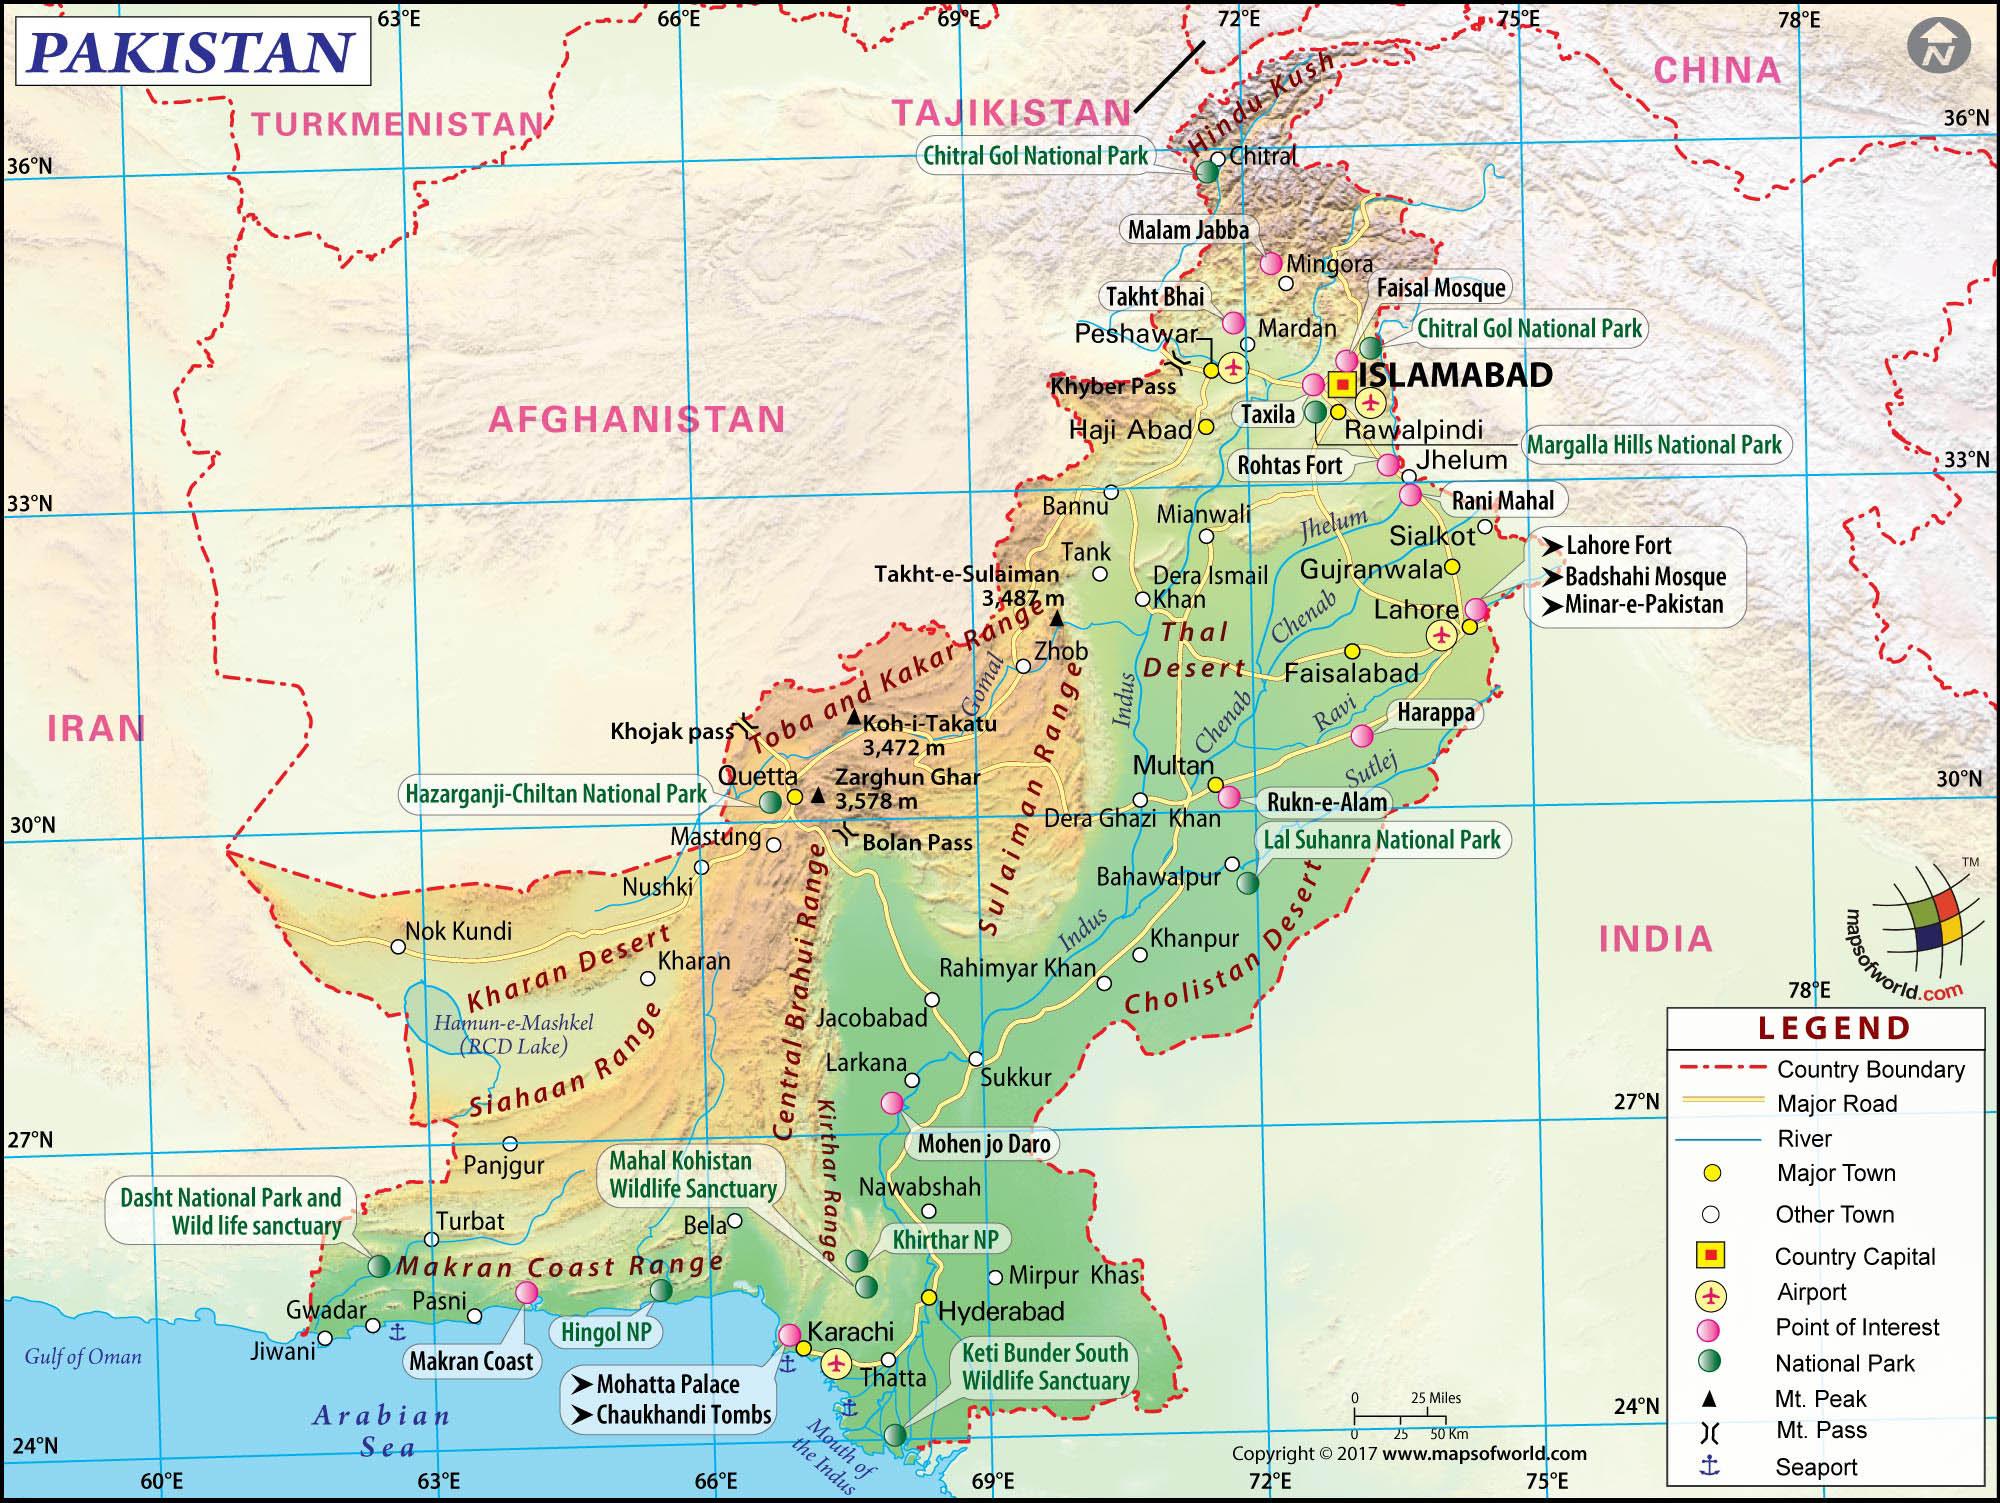 Large Pakistan Map Image [2000 x 2210 pixel] / Large Pakistan Map